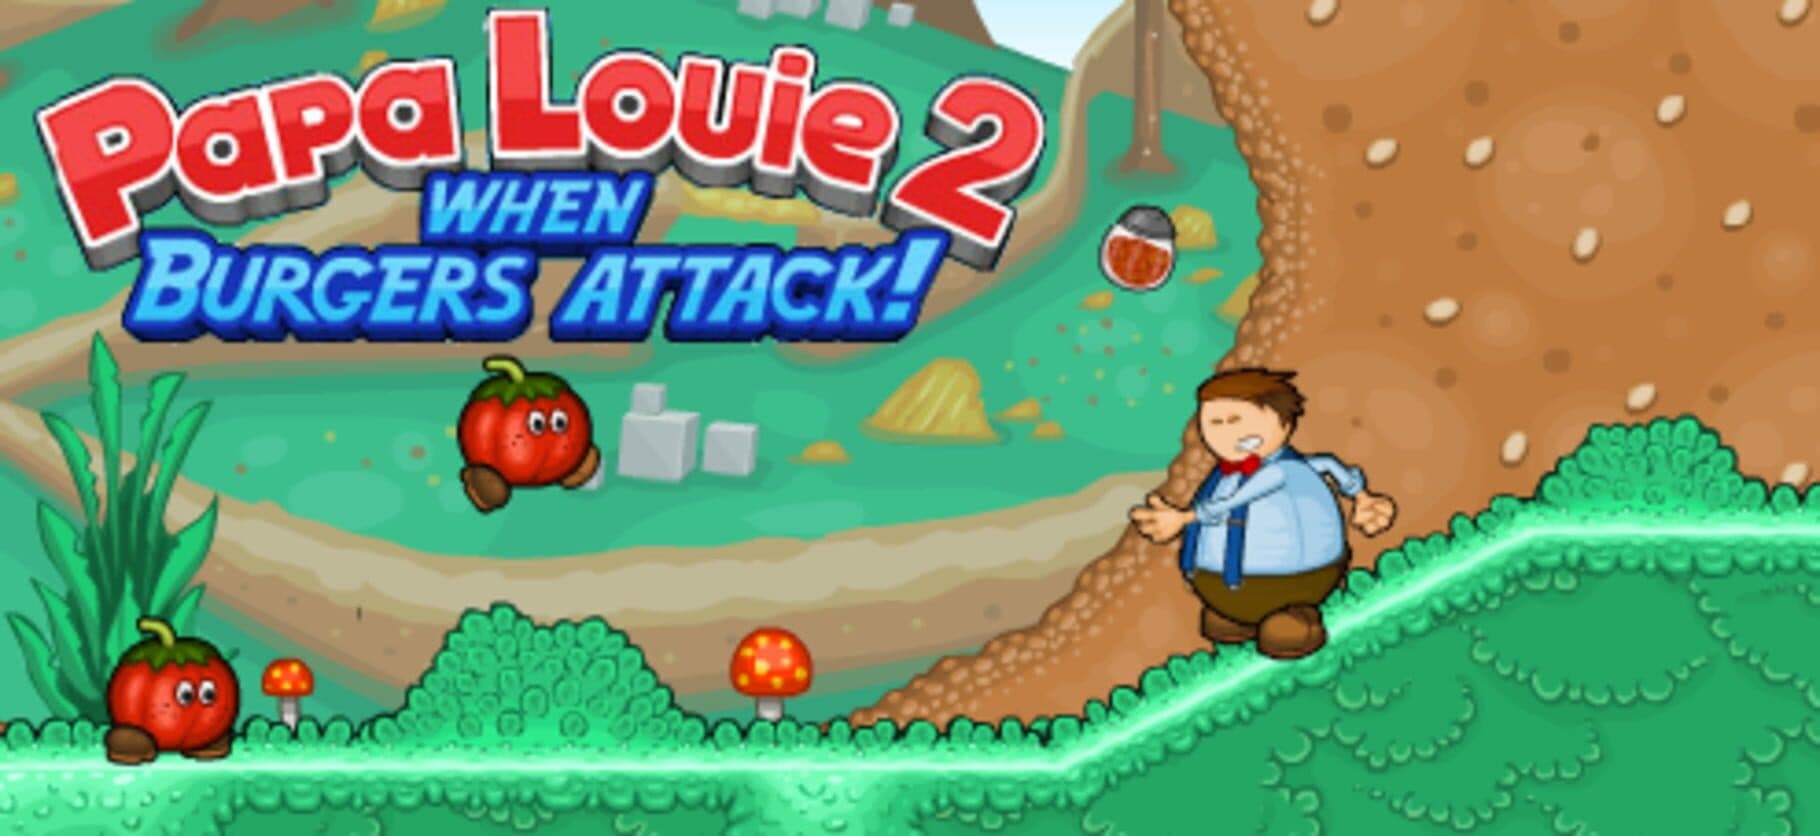 Papa Louie 2: When Burgers Attack! cover art